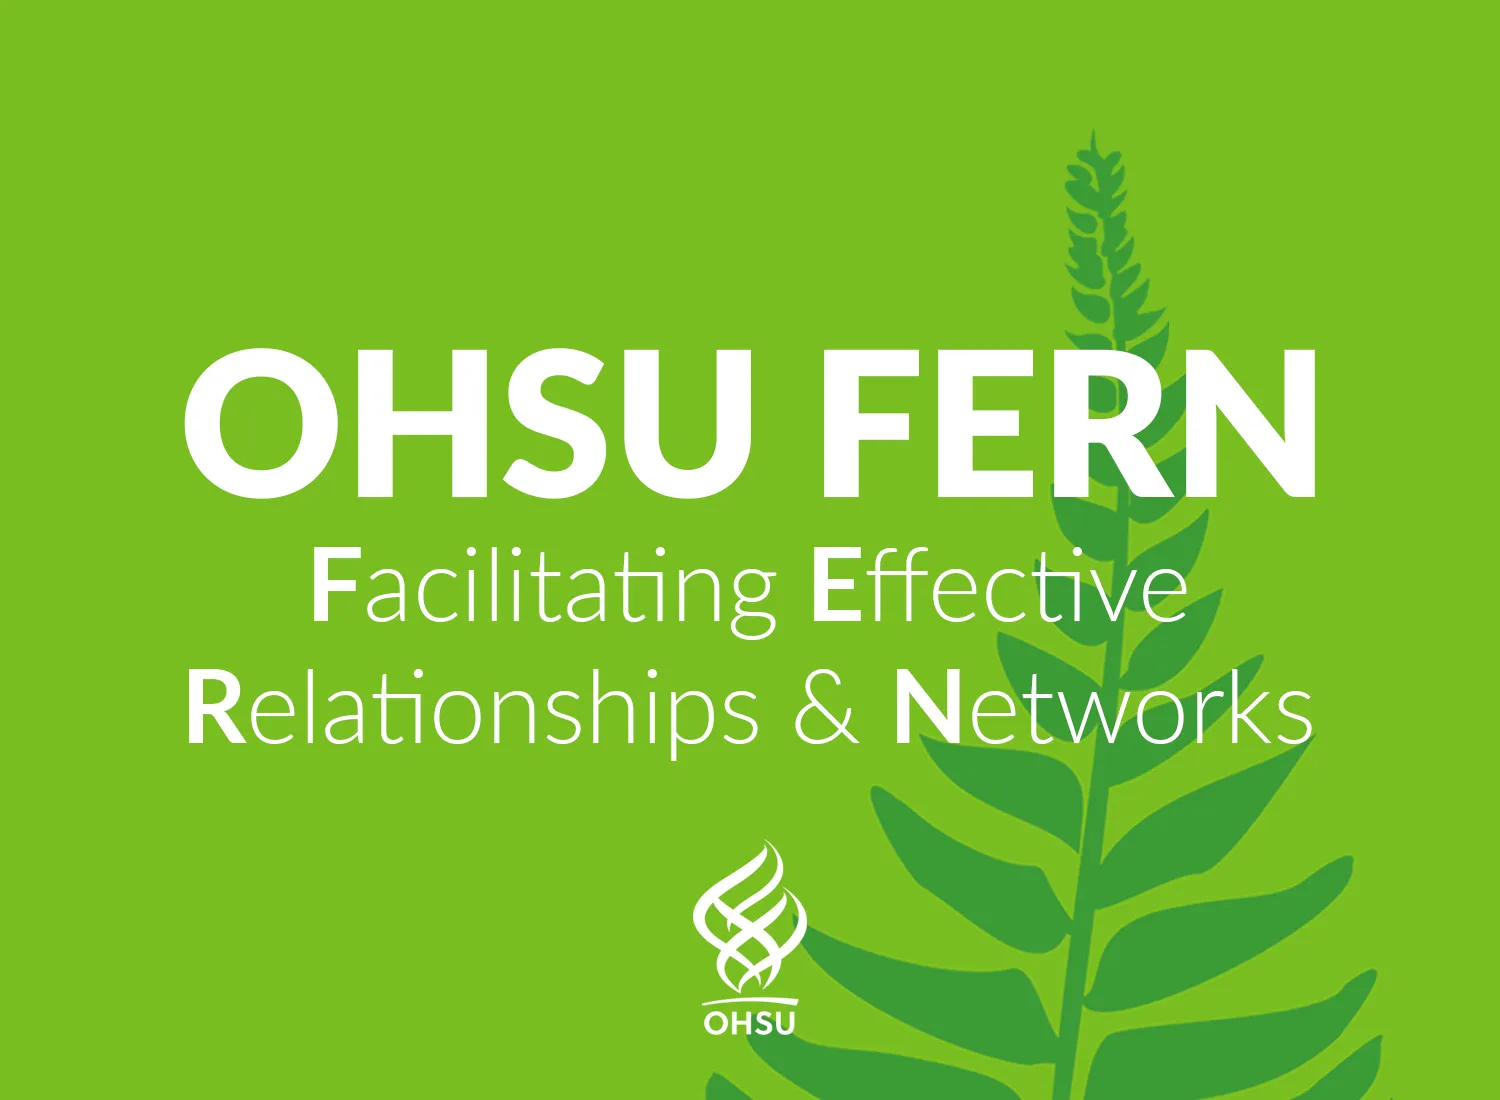 OHSU FERN, Facilitating Effective Relationships & Networks